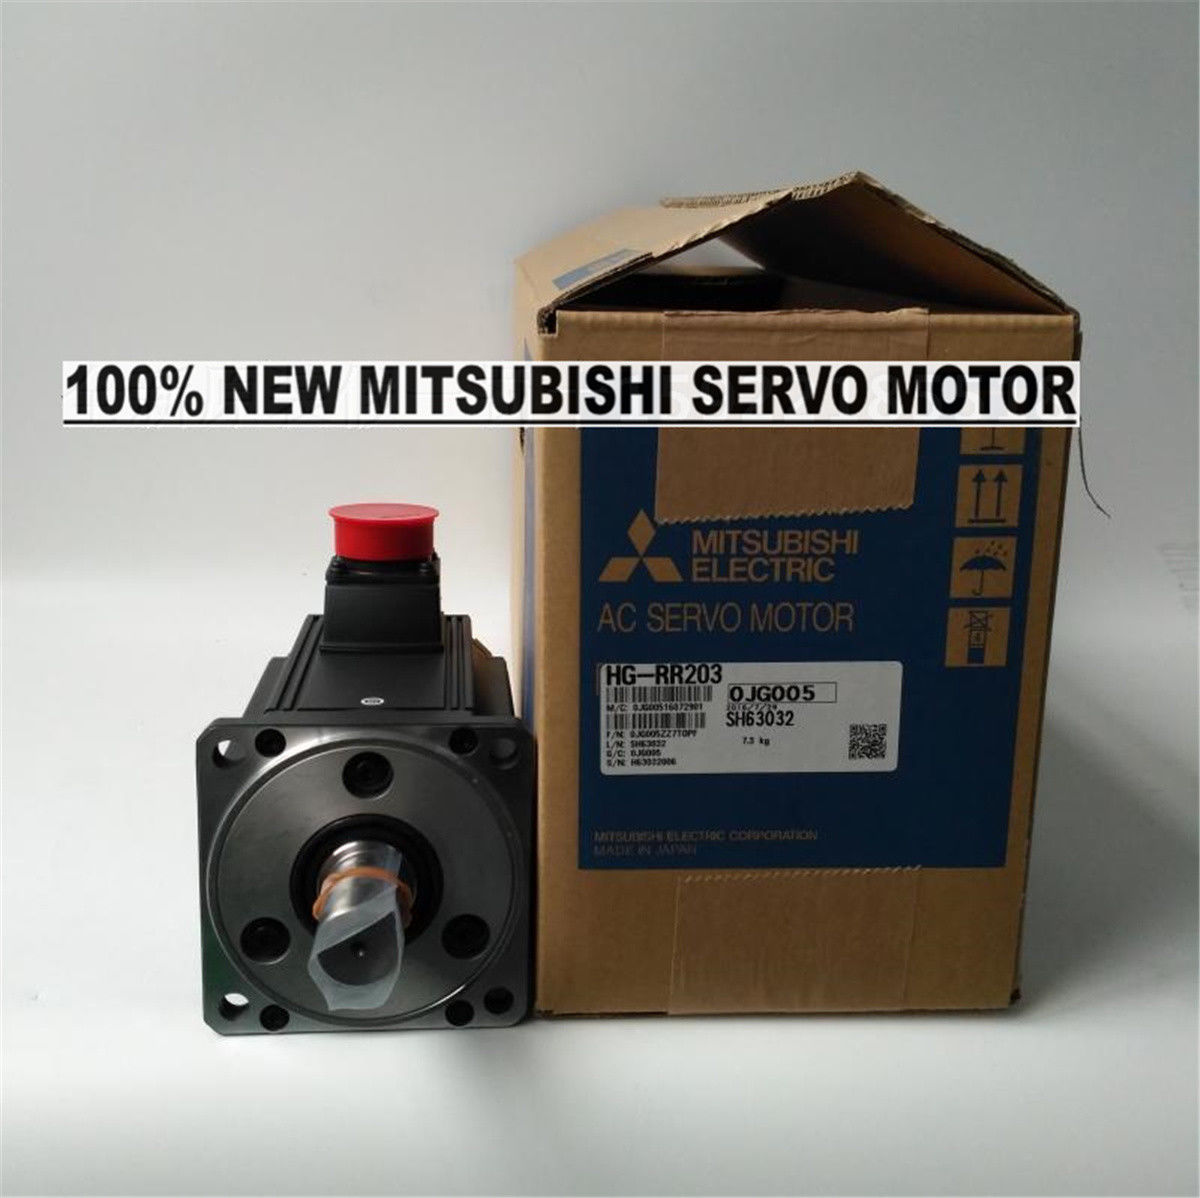 GENUINE NEW Mitsubishi Servo Motor HG-RR203 in box HGRR203